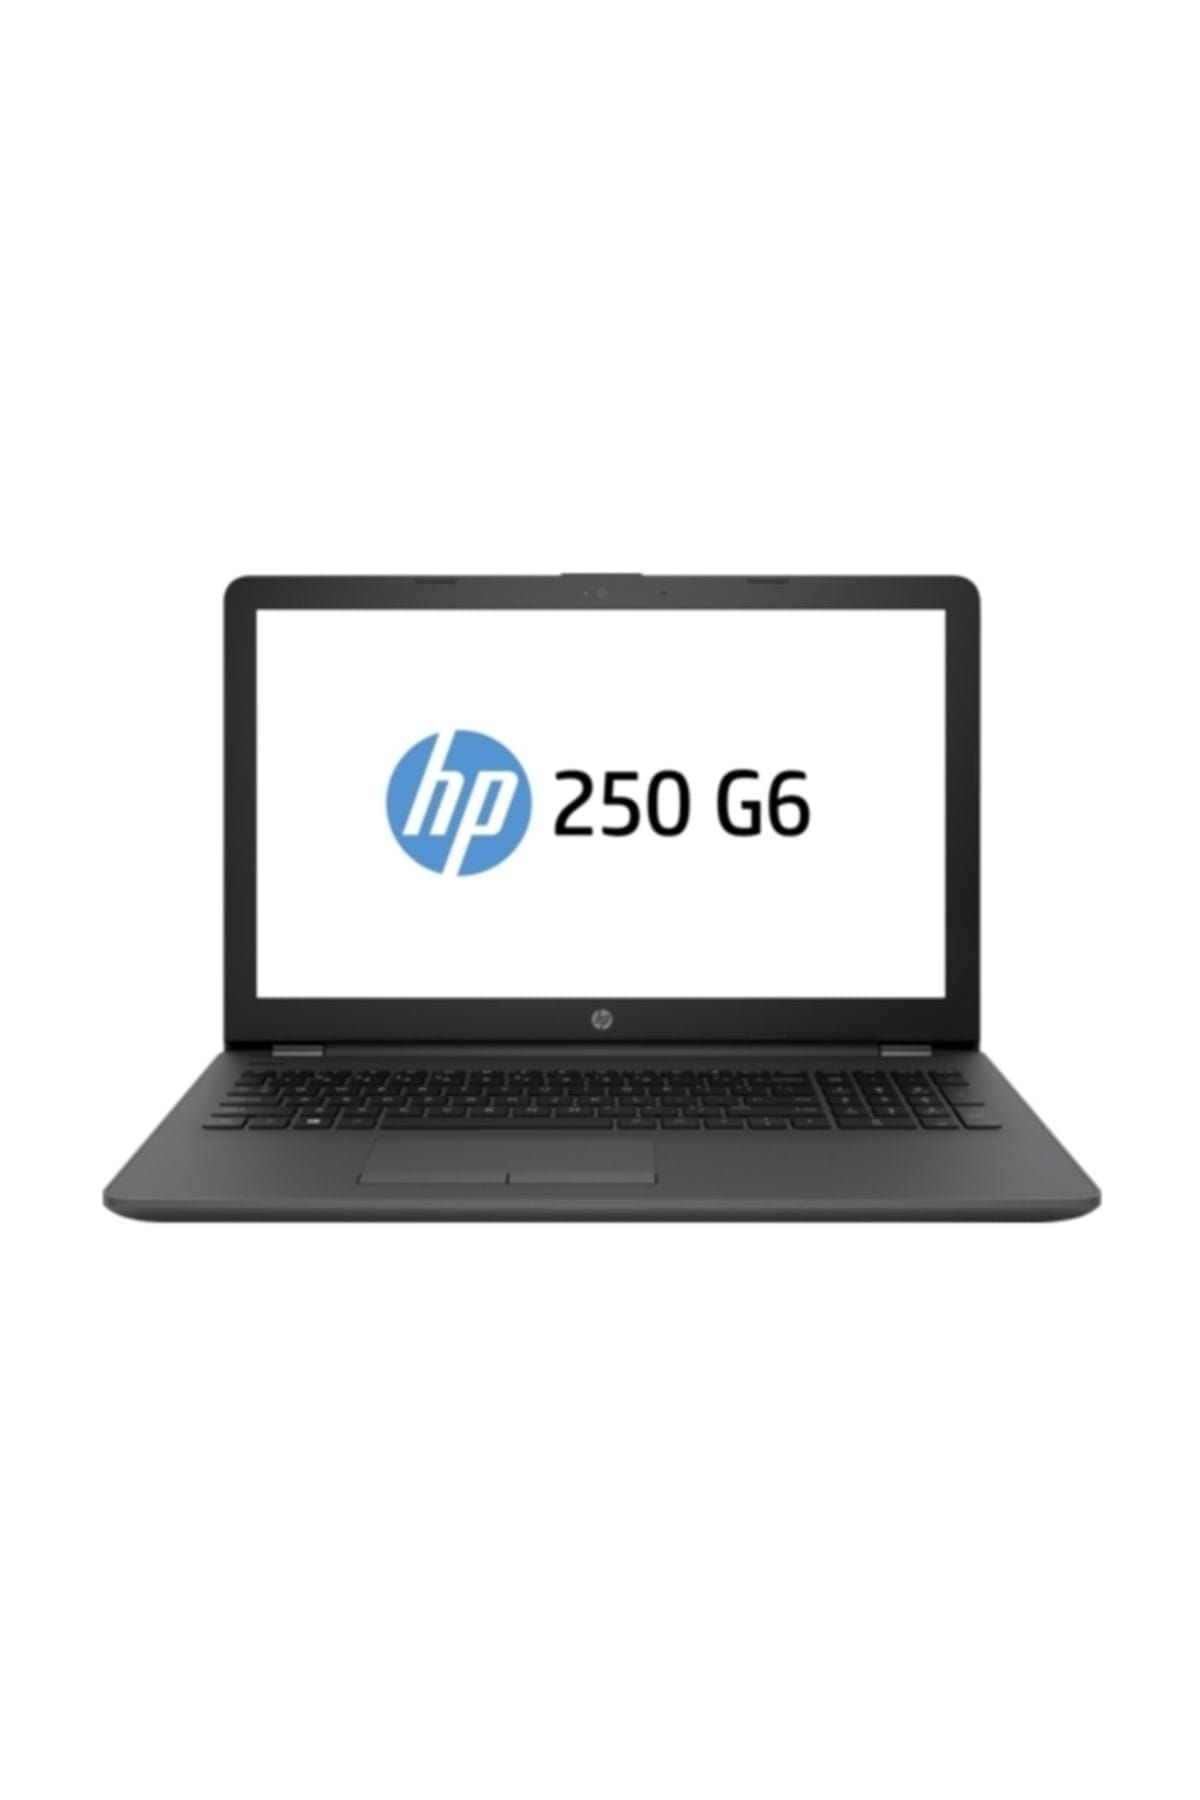 HP 250 G6 1XN35EA i5-7200U 4GB 500GB 2GB Radeon 520 15.6 FreeDOS